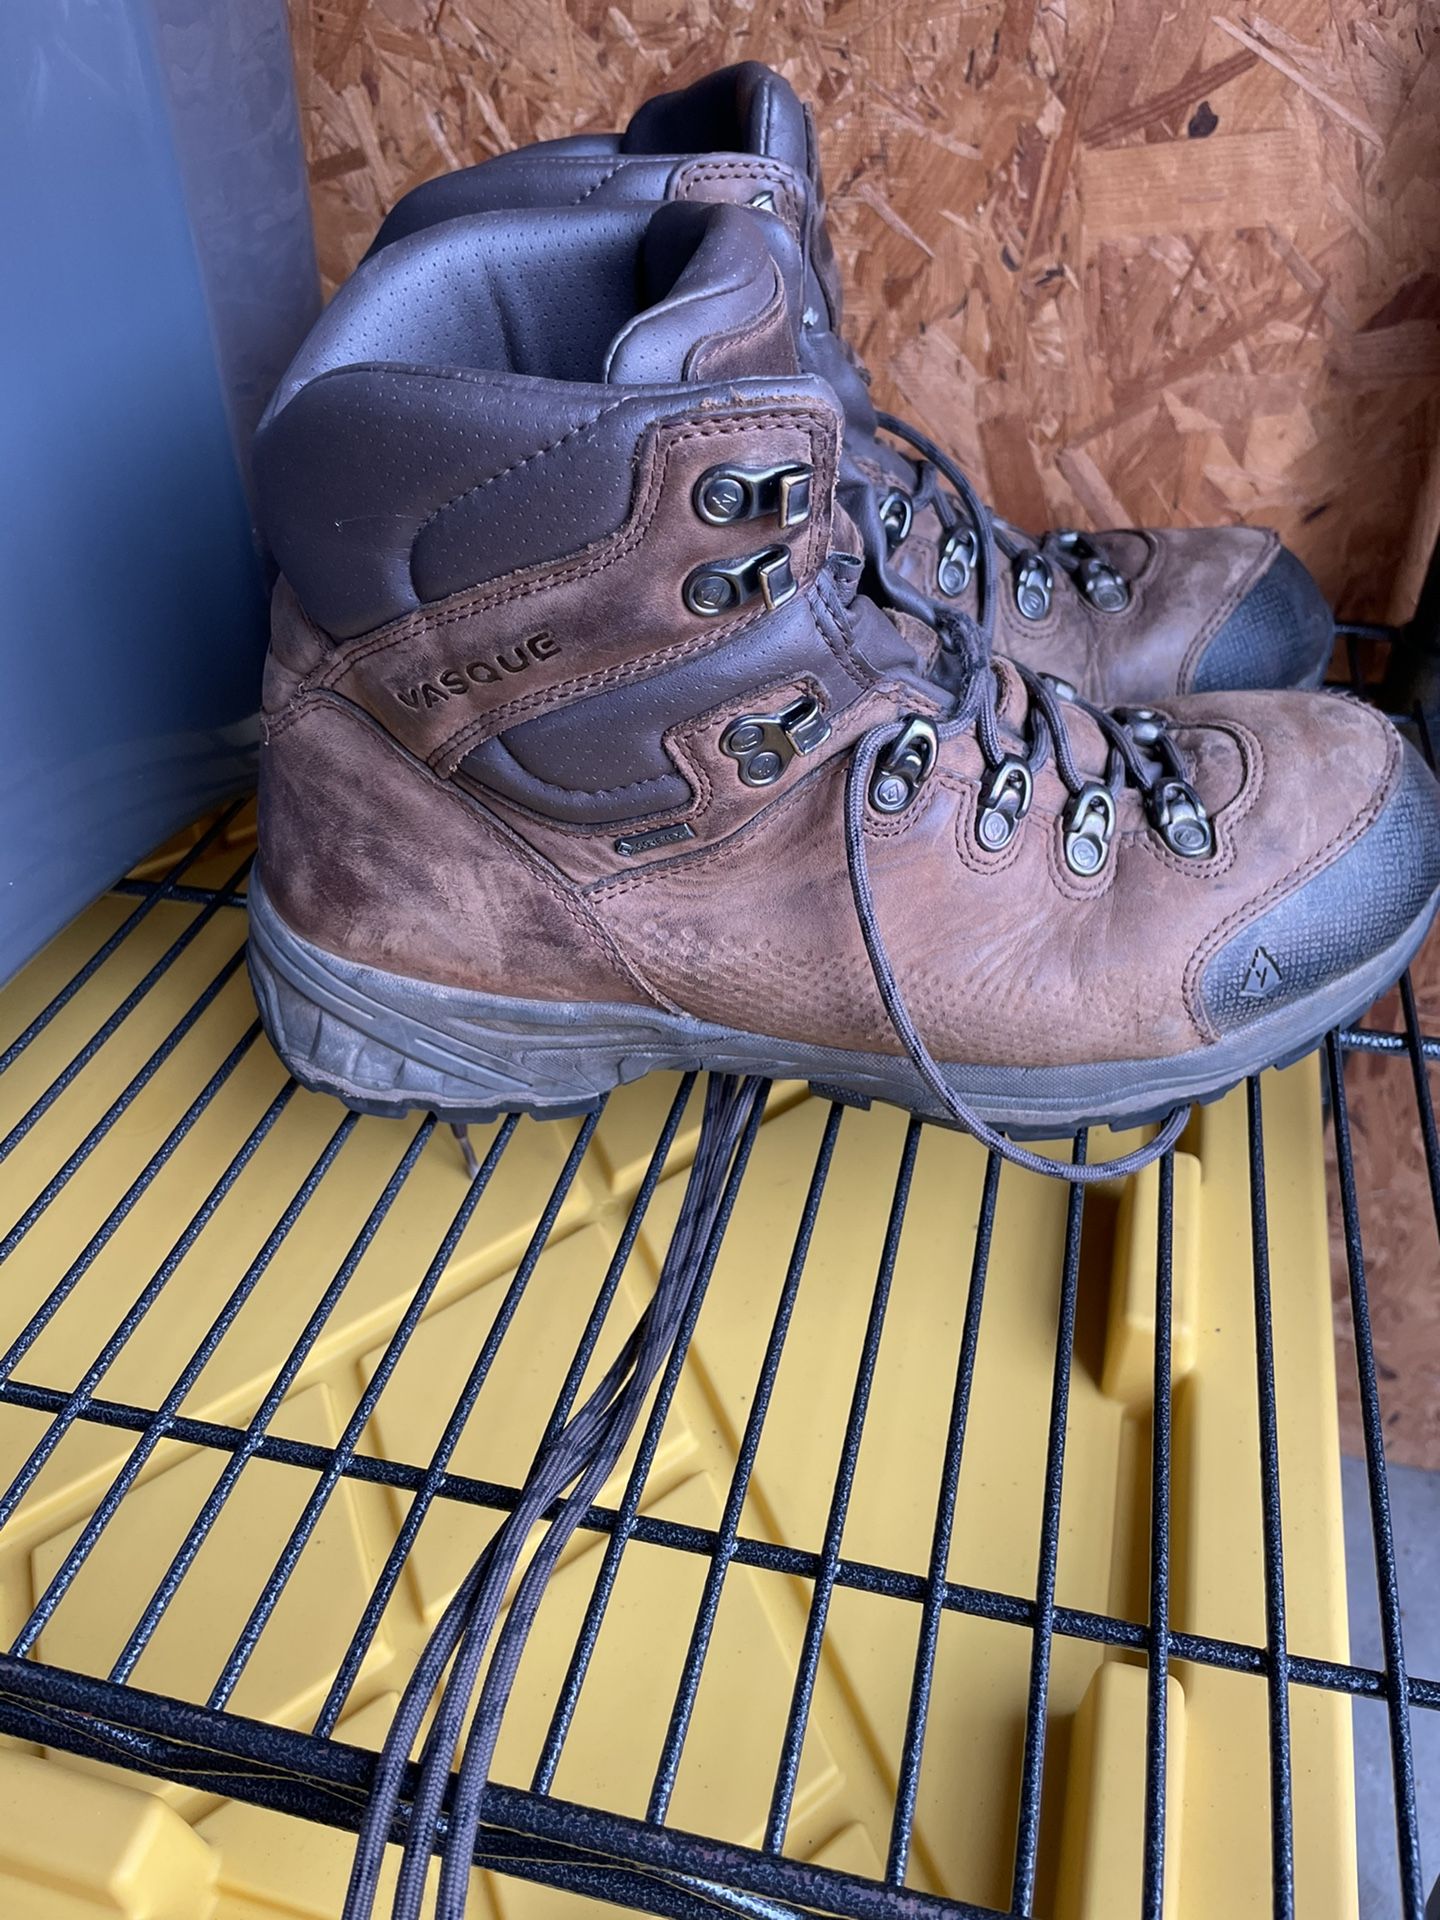 Vasque Mens Hiking Boots 10w